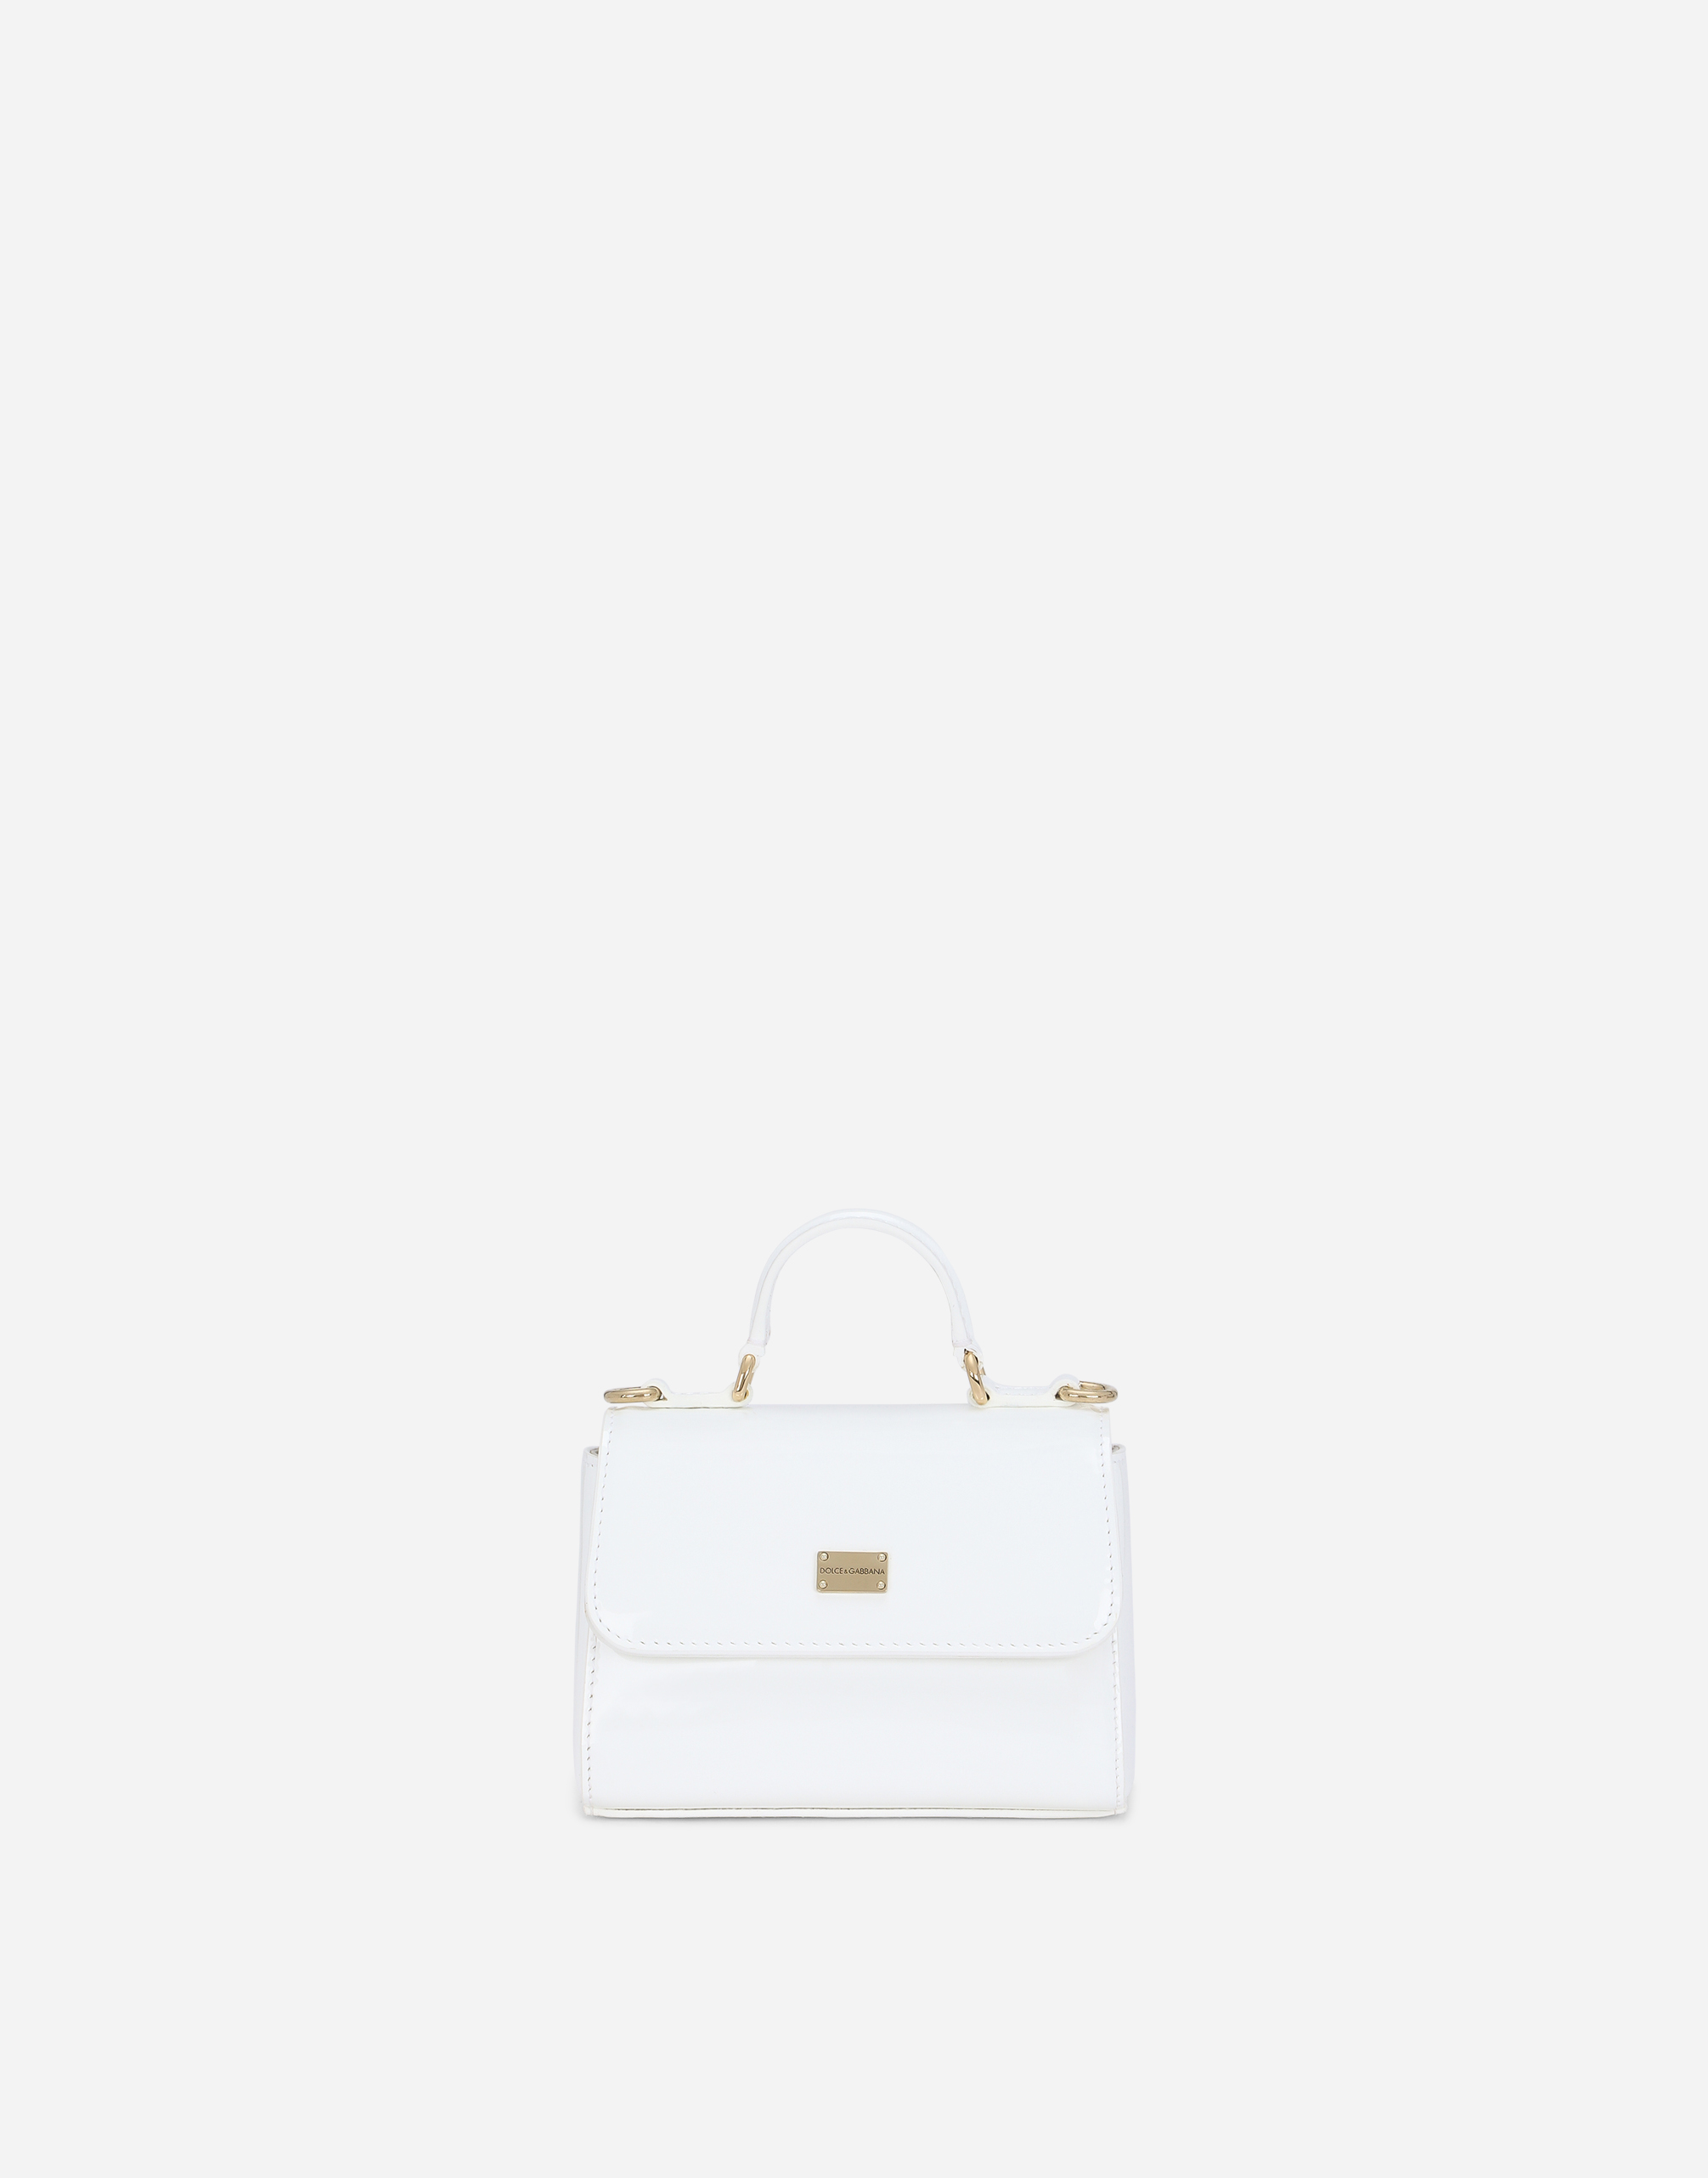 Patent leather handbag in White